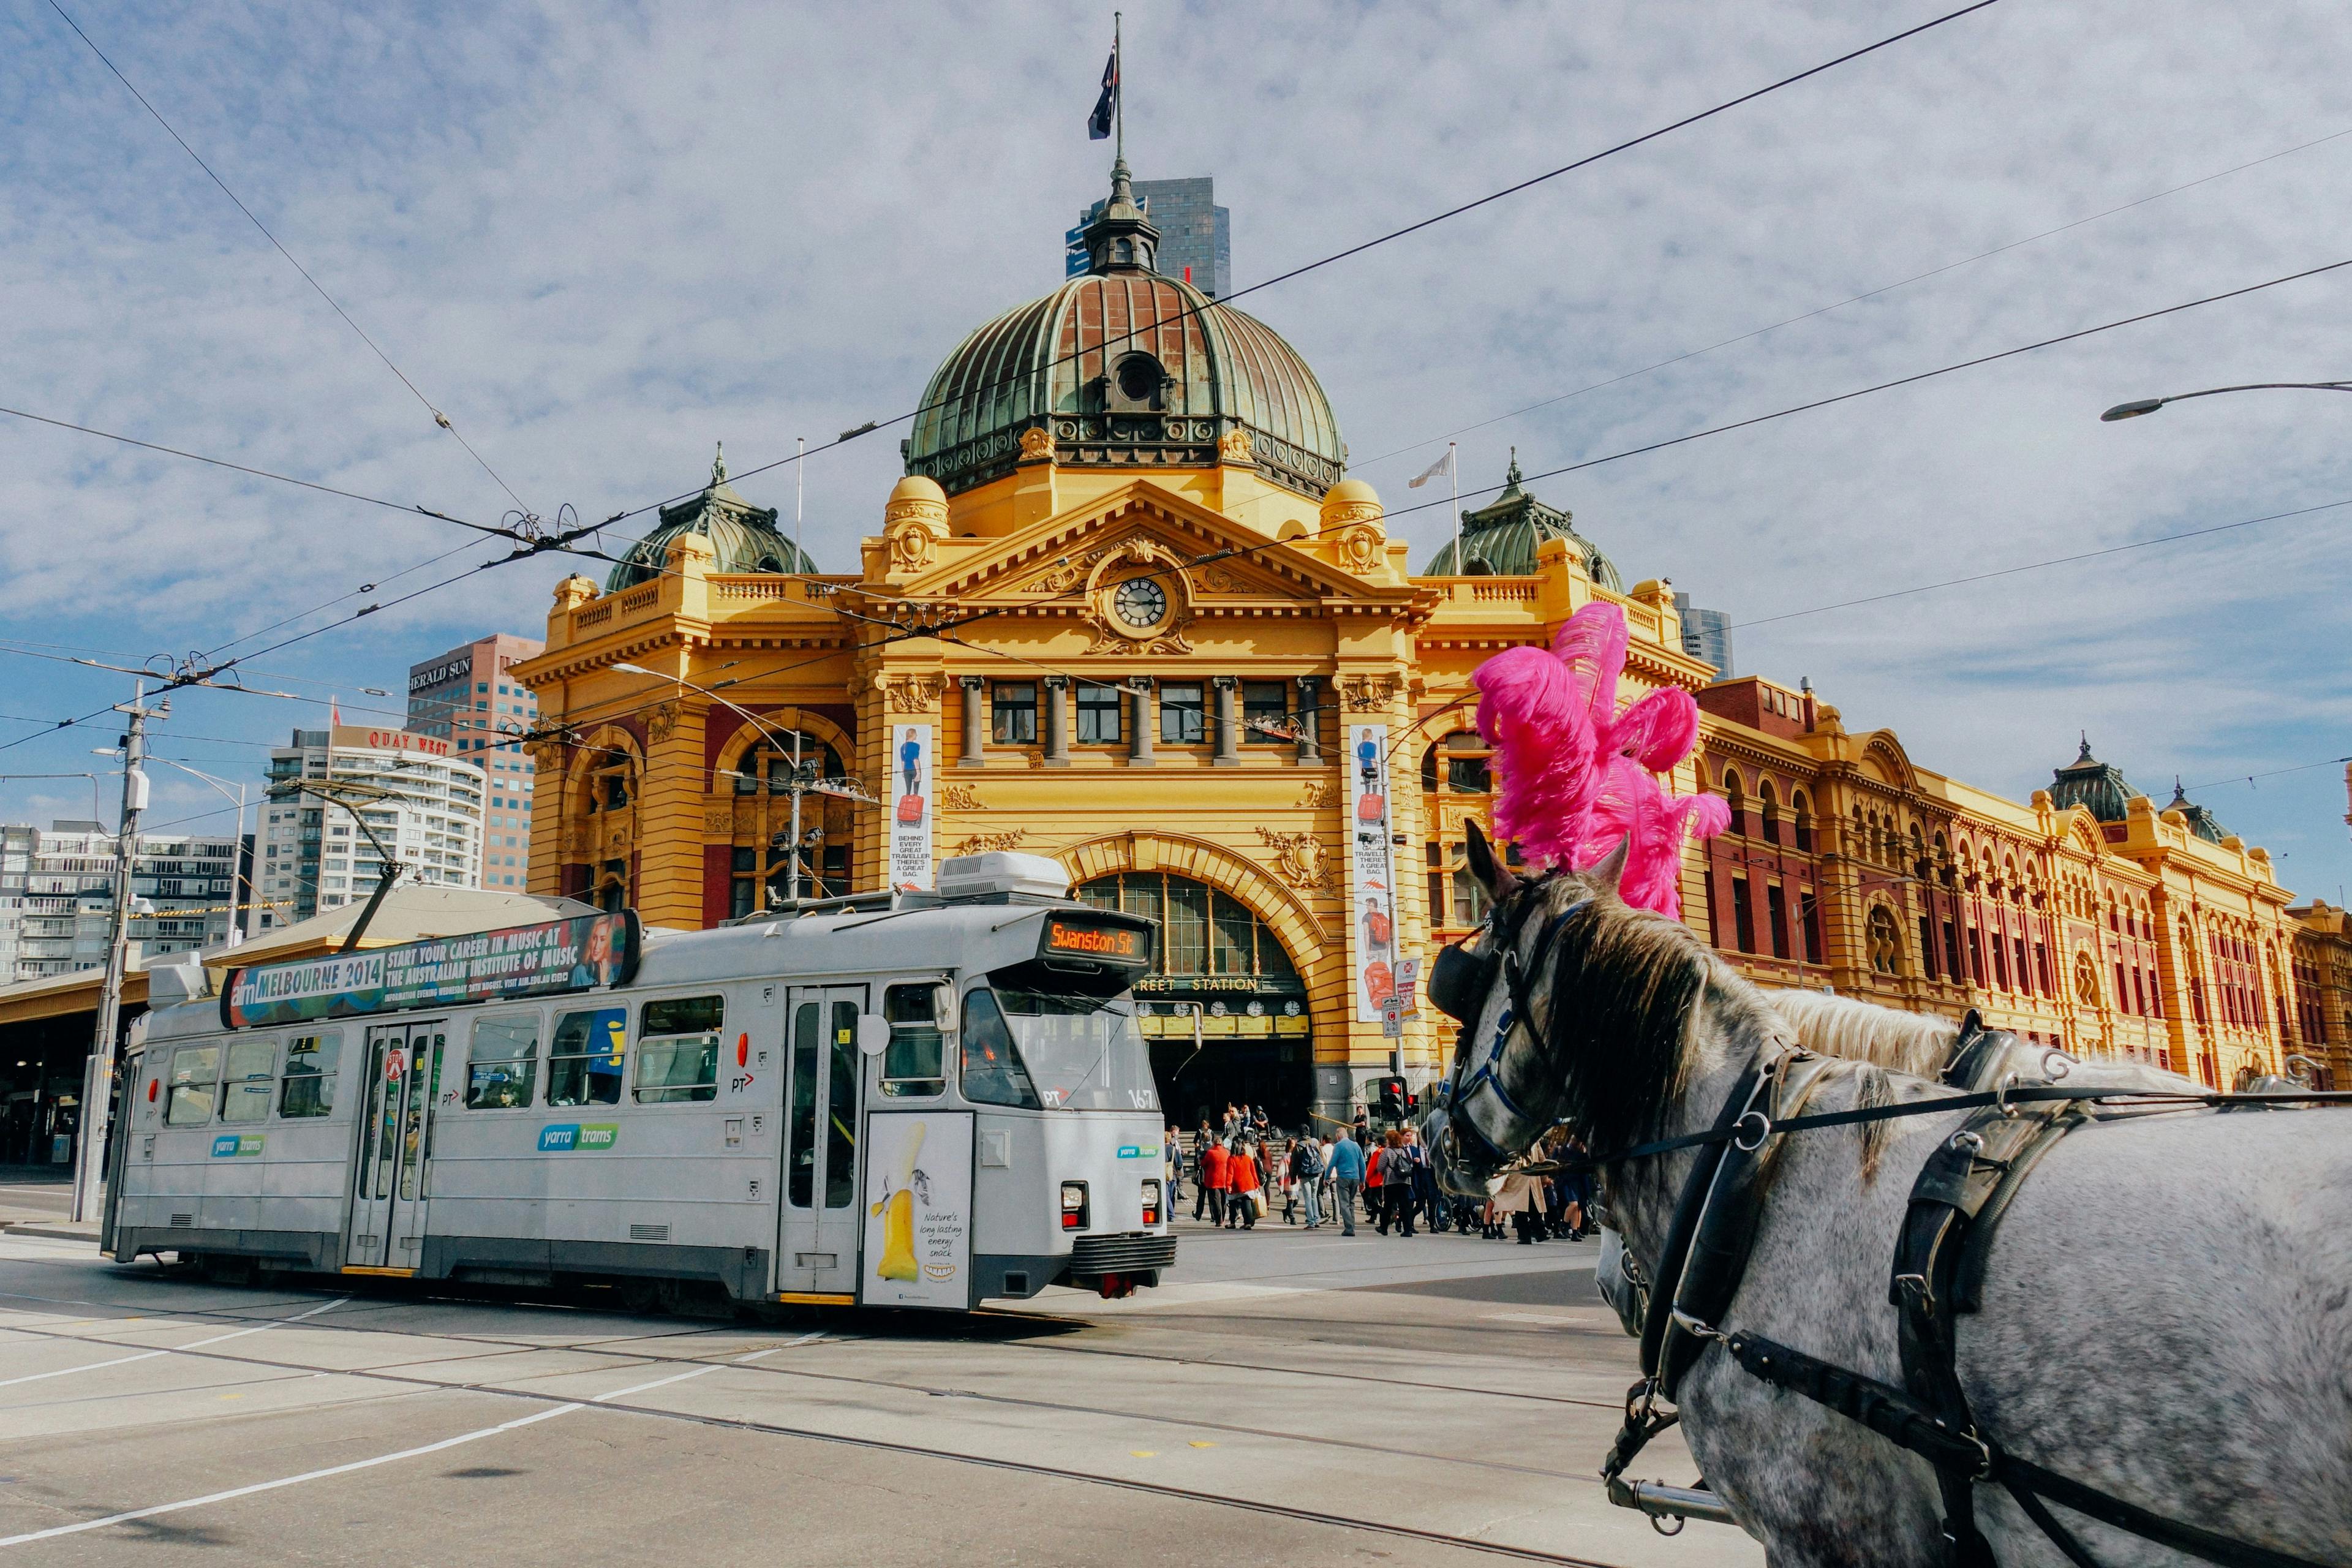 Flinders Street Railway Station in Melbourne, Australia.